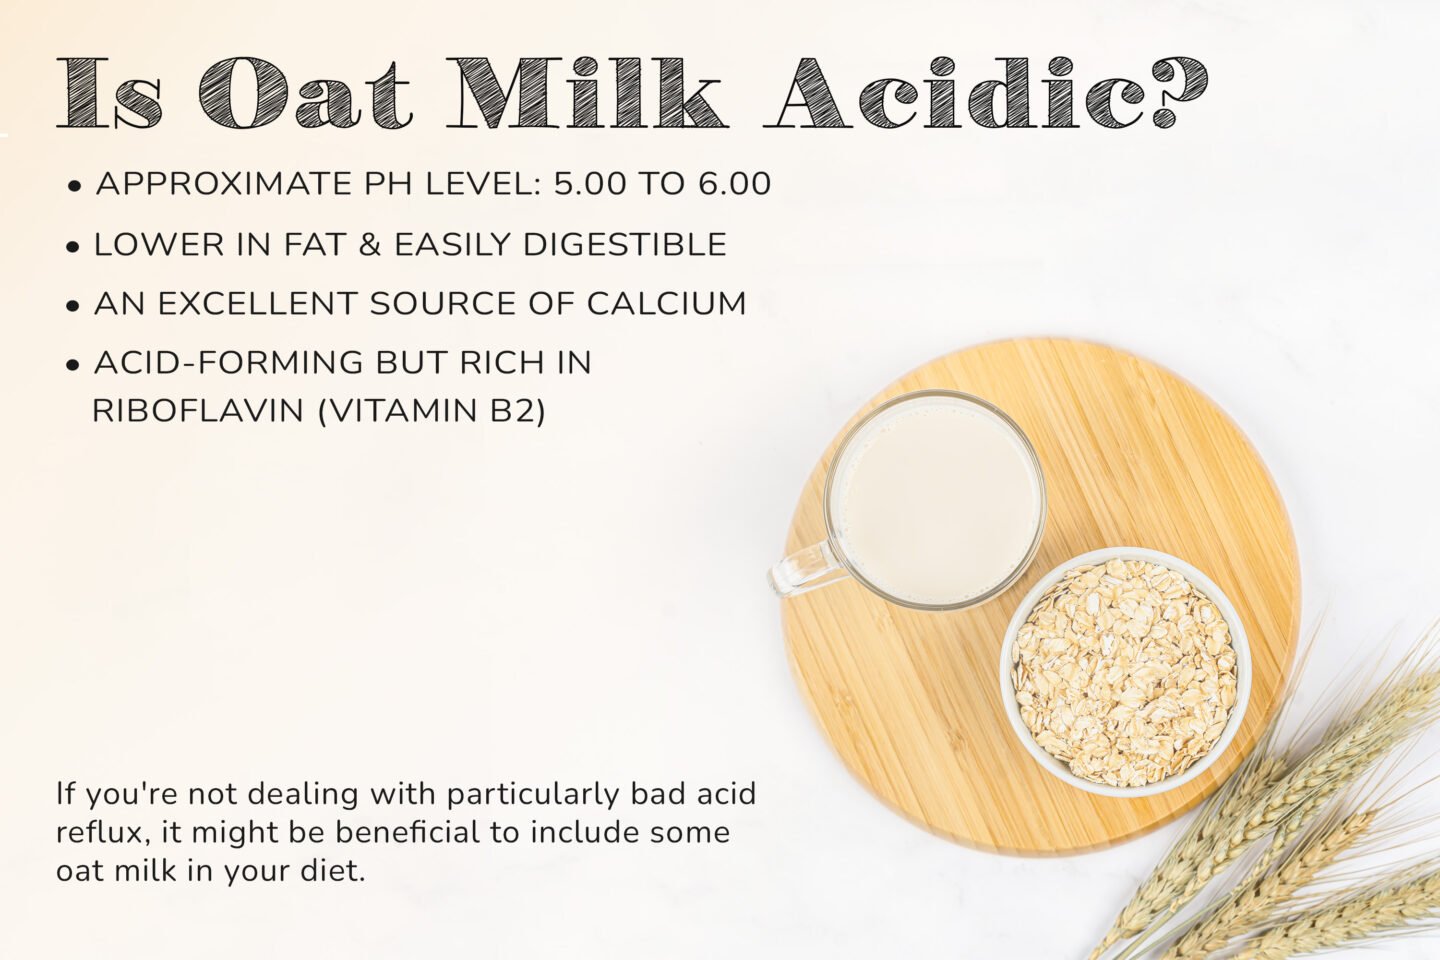 oat milk acidic infographic